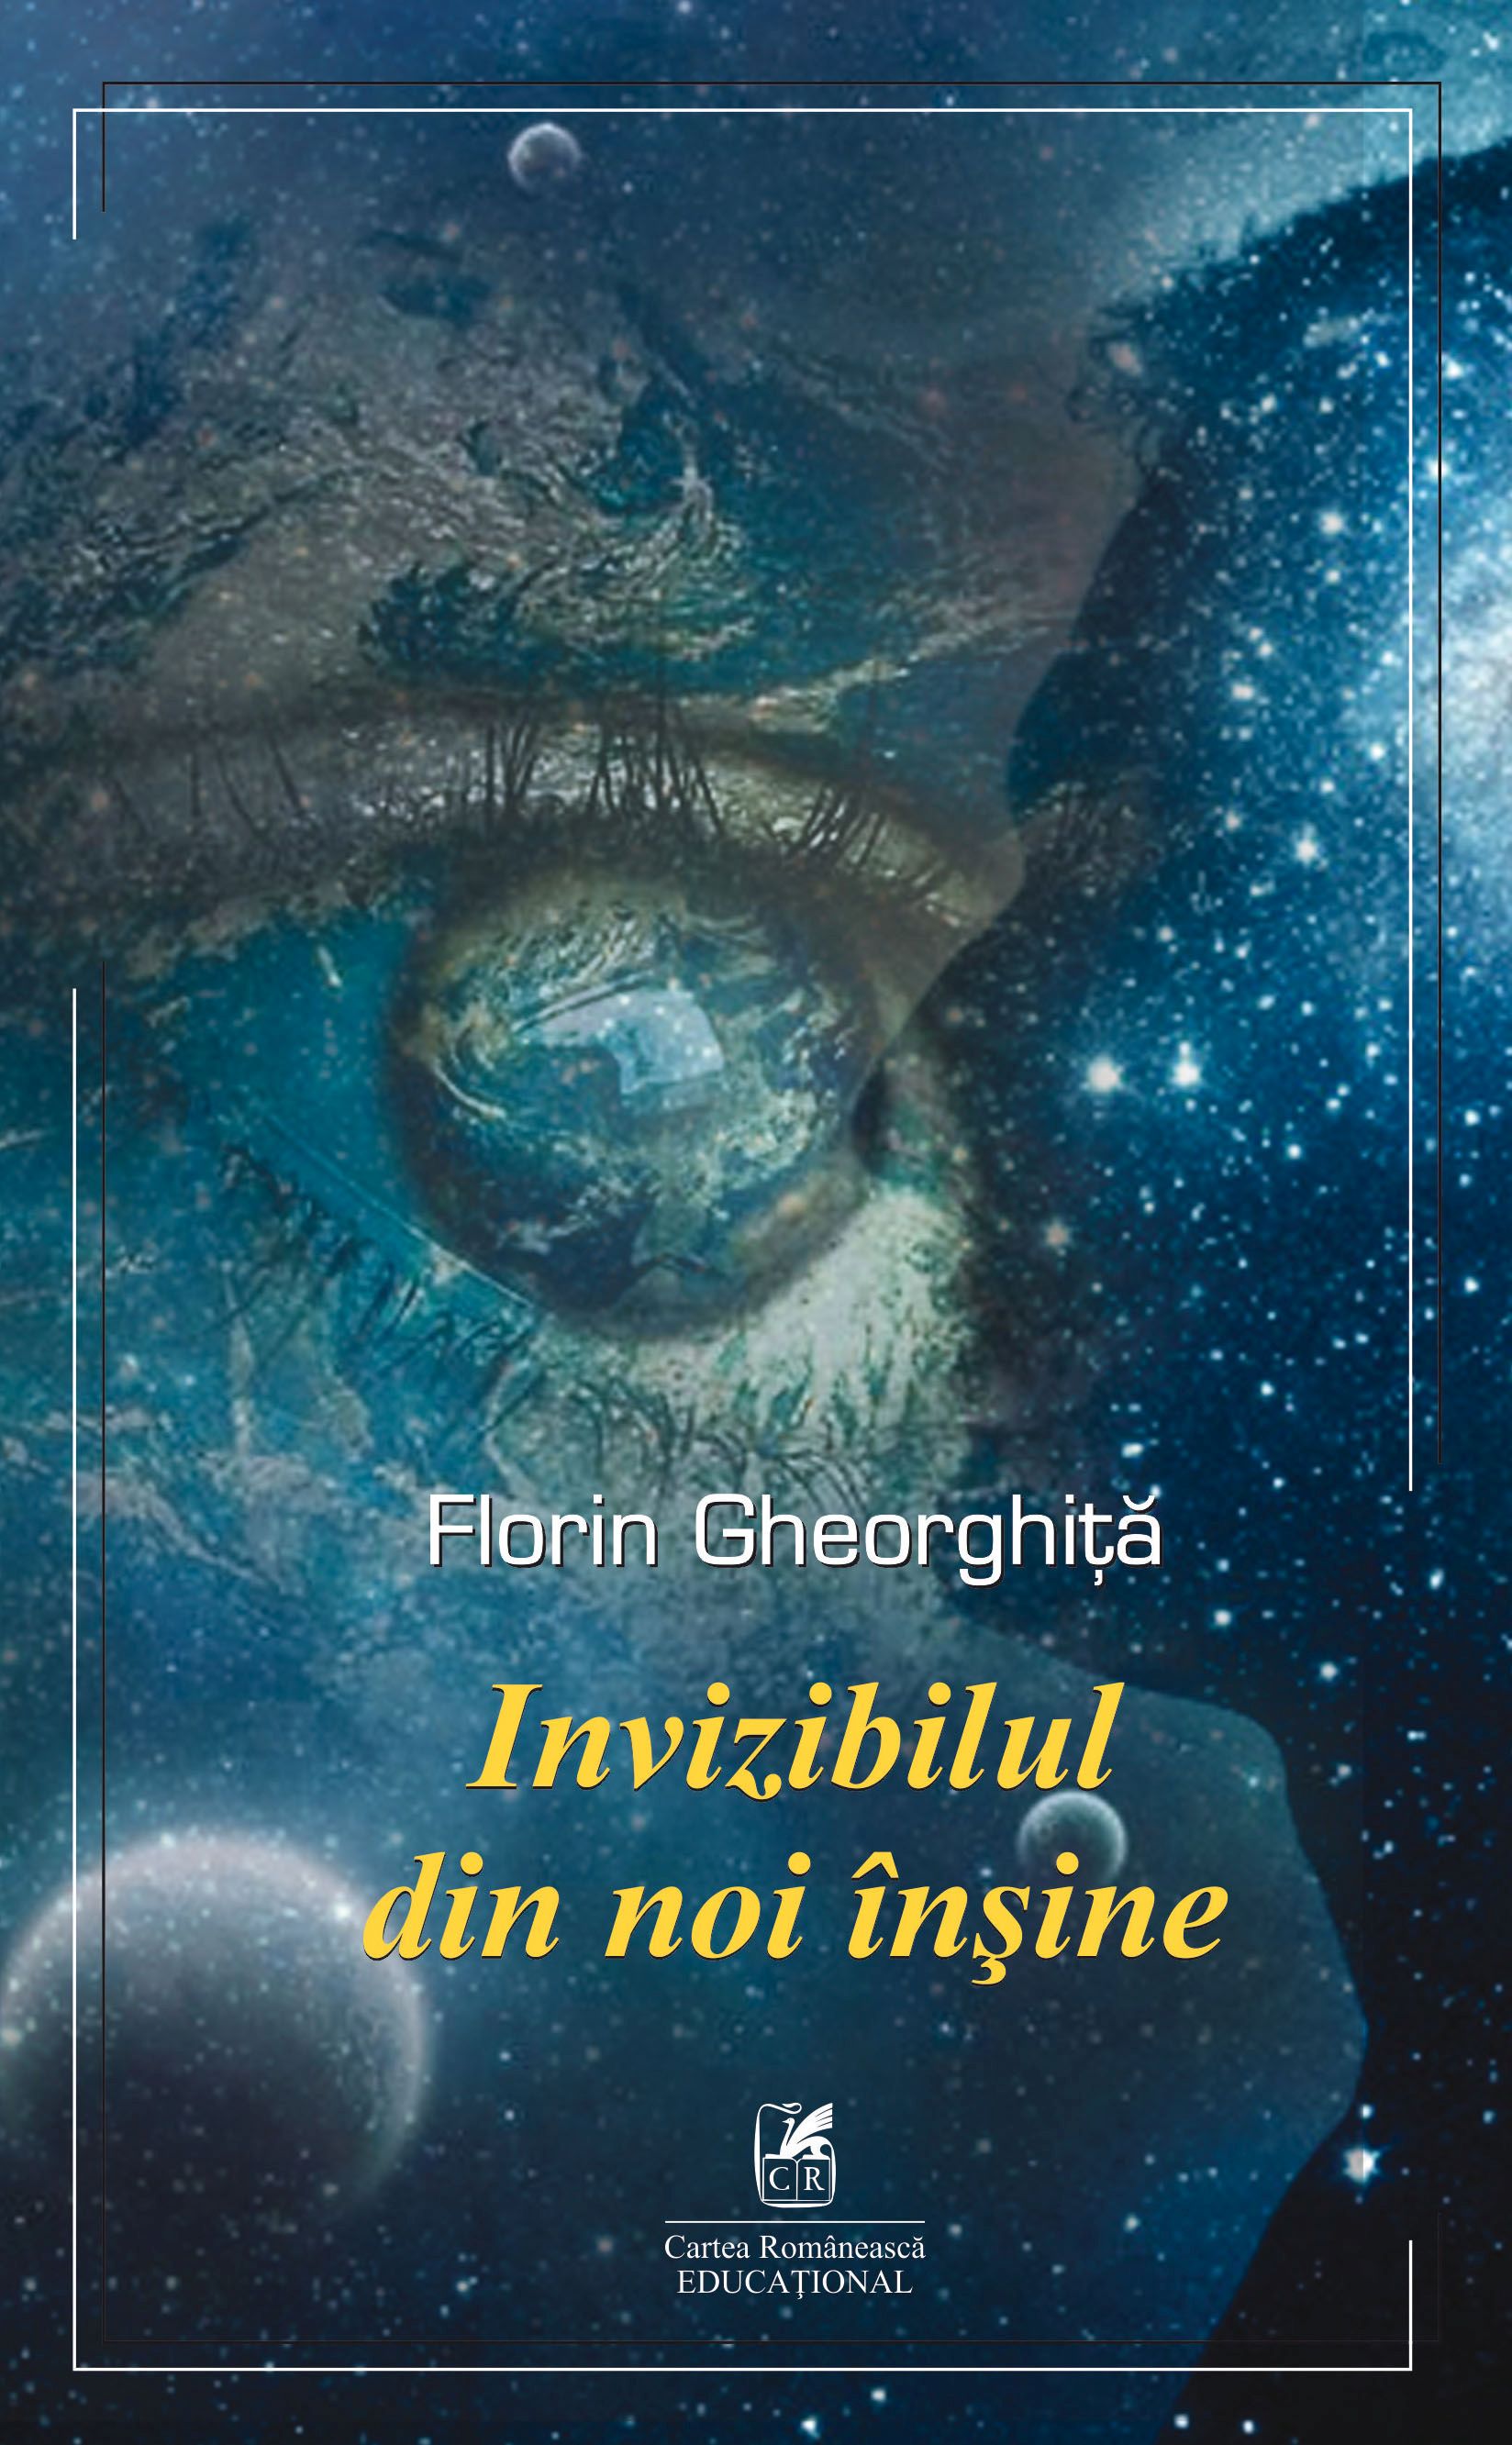 Invizibilul din noi insine | Florin Gheorghita Cartea Romaneasca educational poza bestsellers.ro